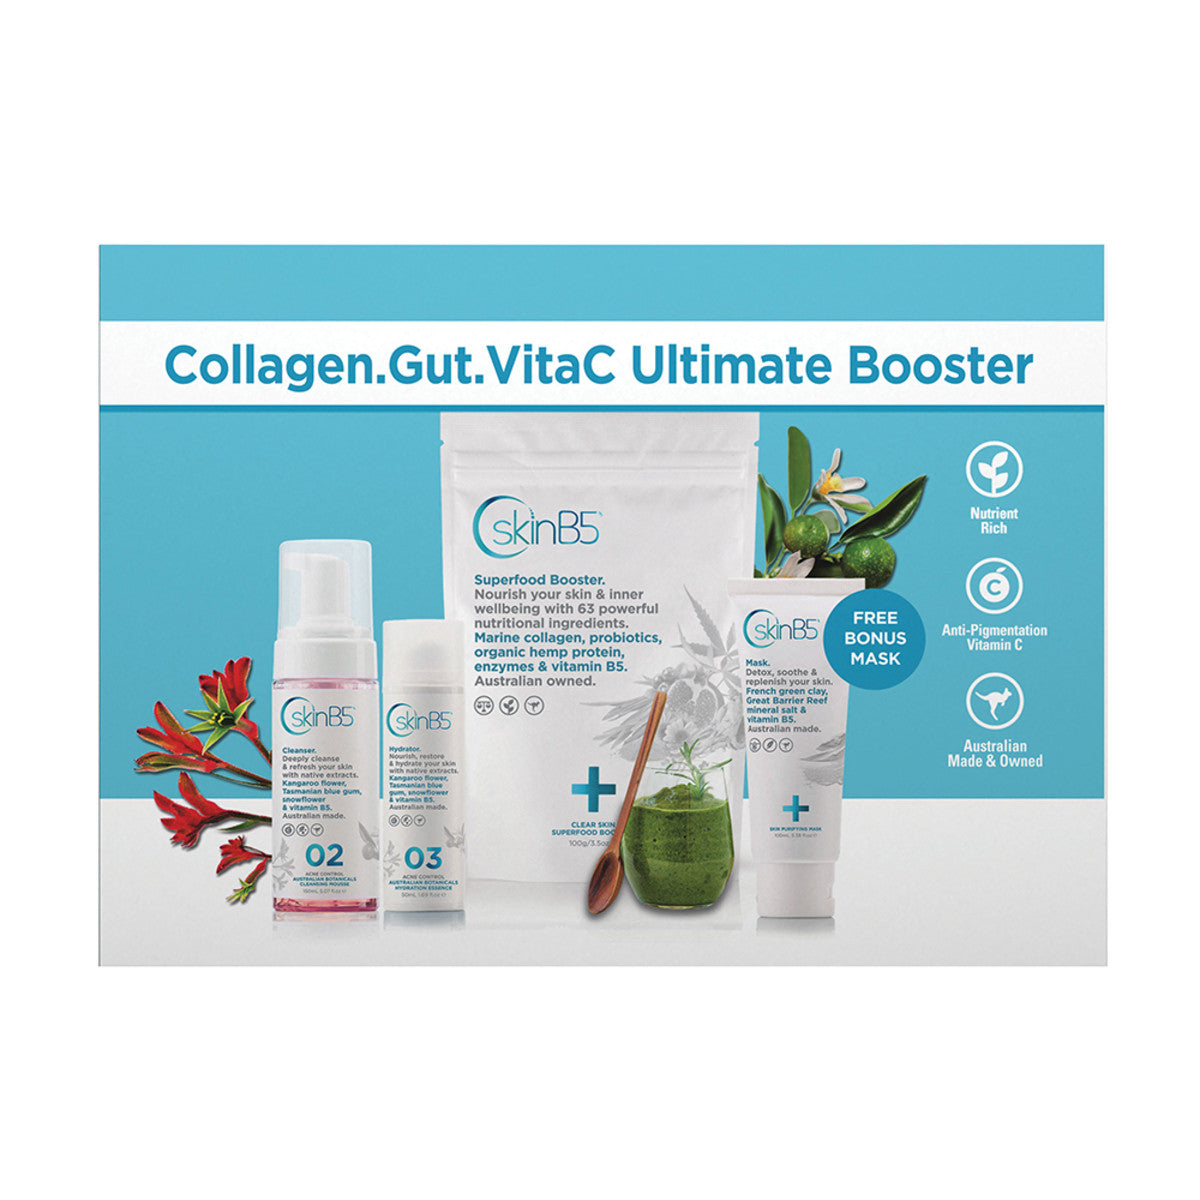 free  mask! skinb5 anti-aging collagen gut vitamin c ultimate booster kit